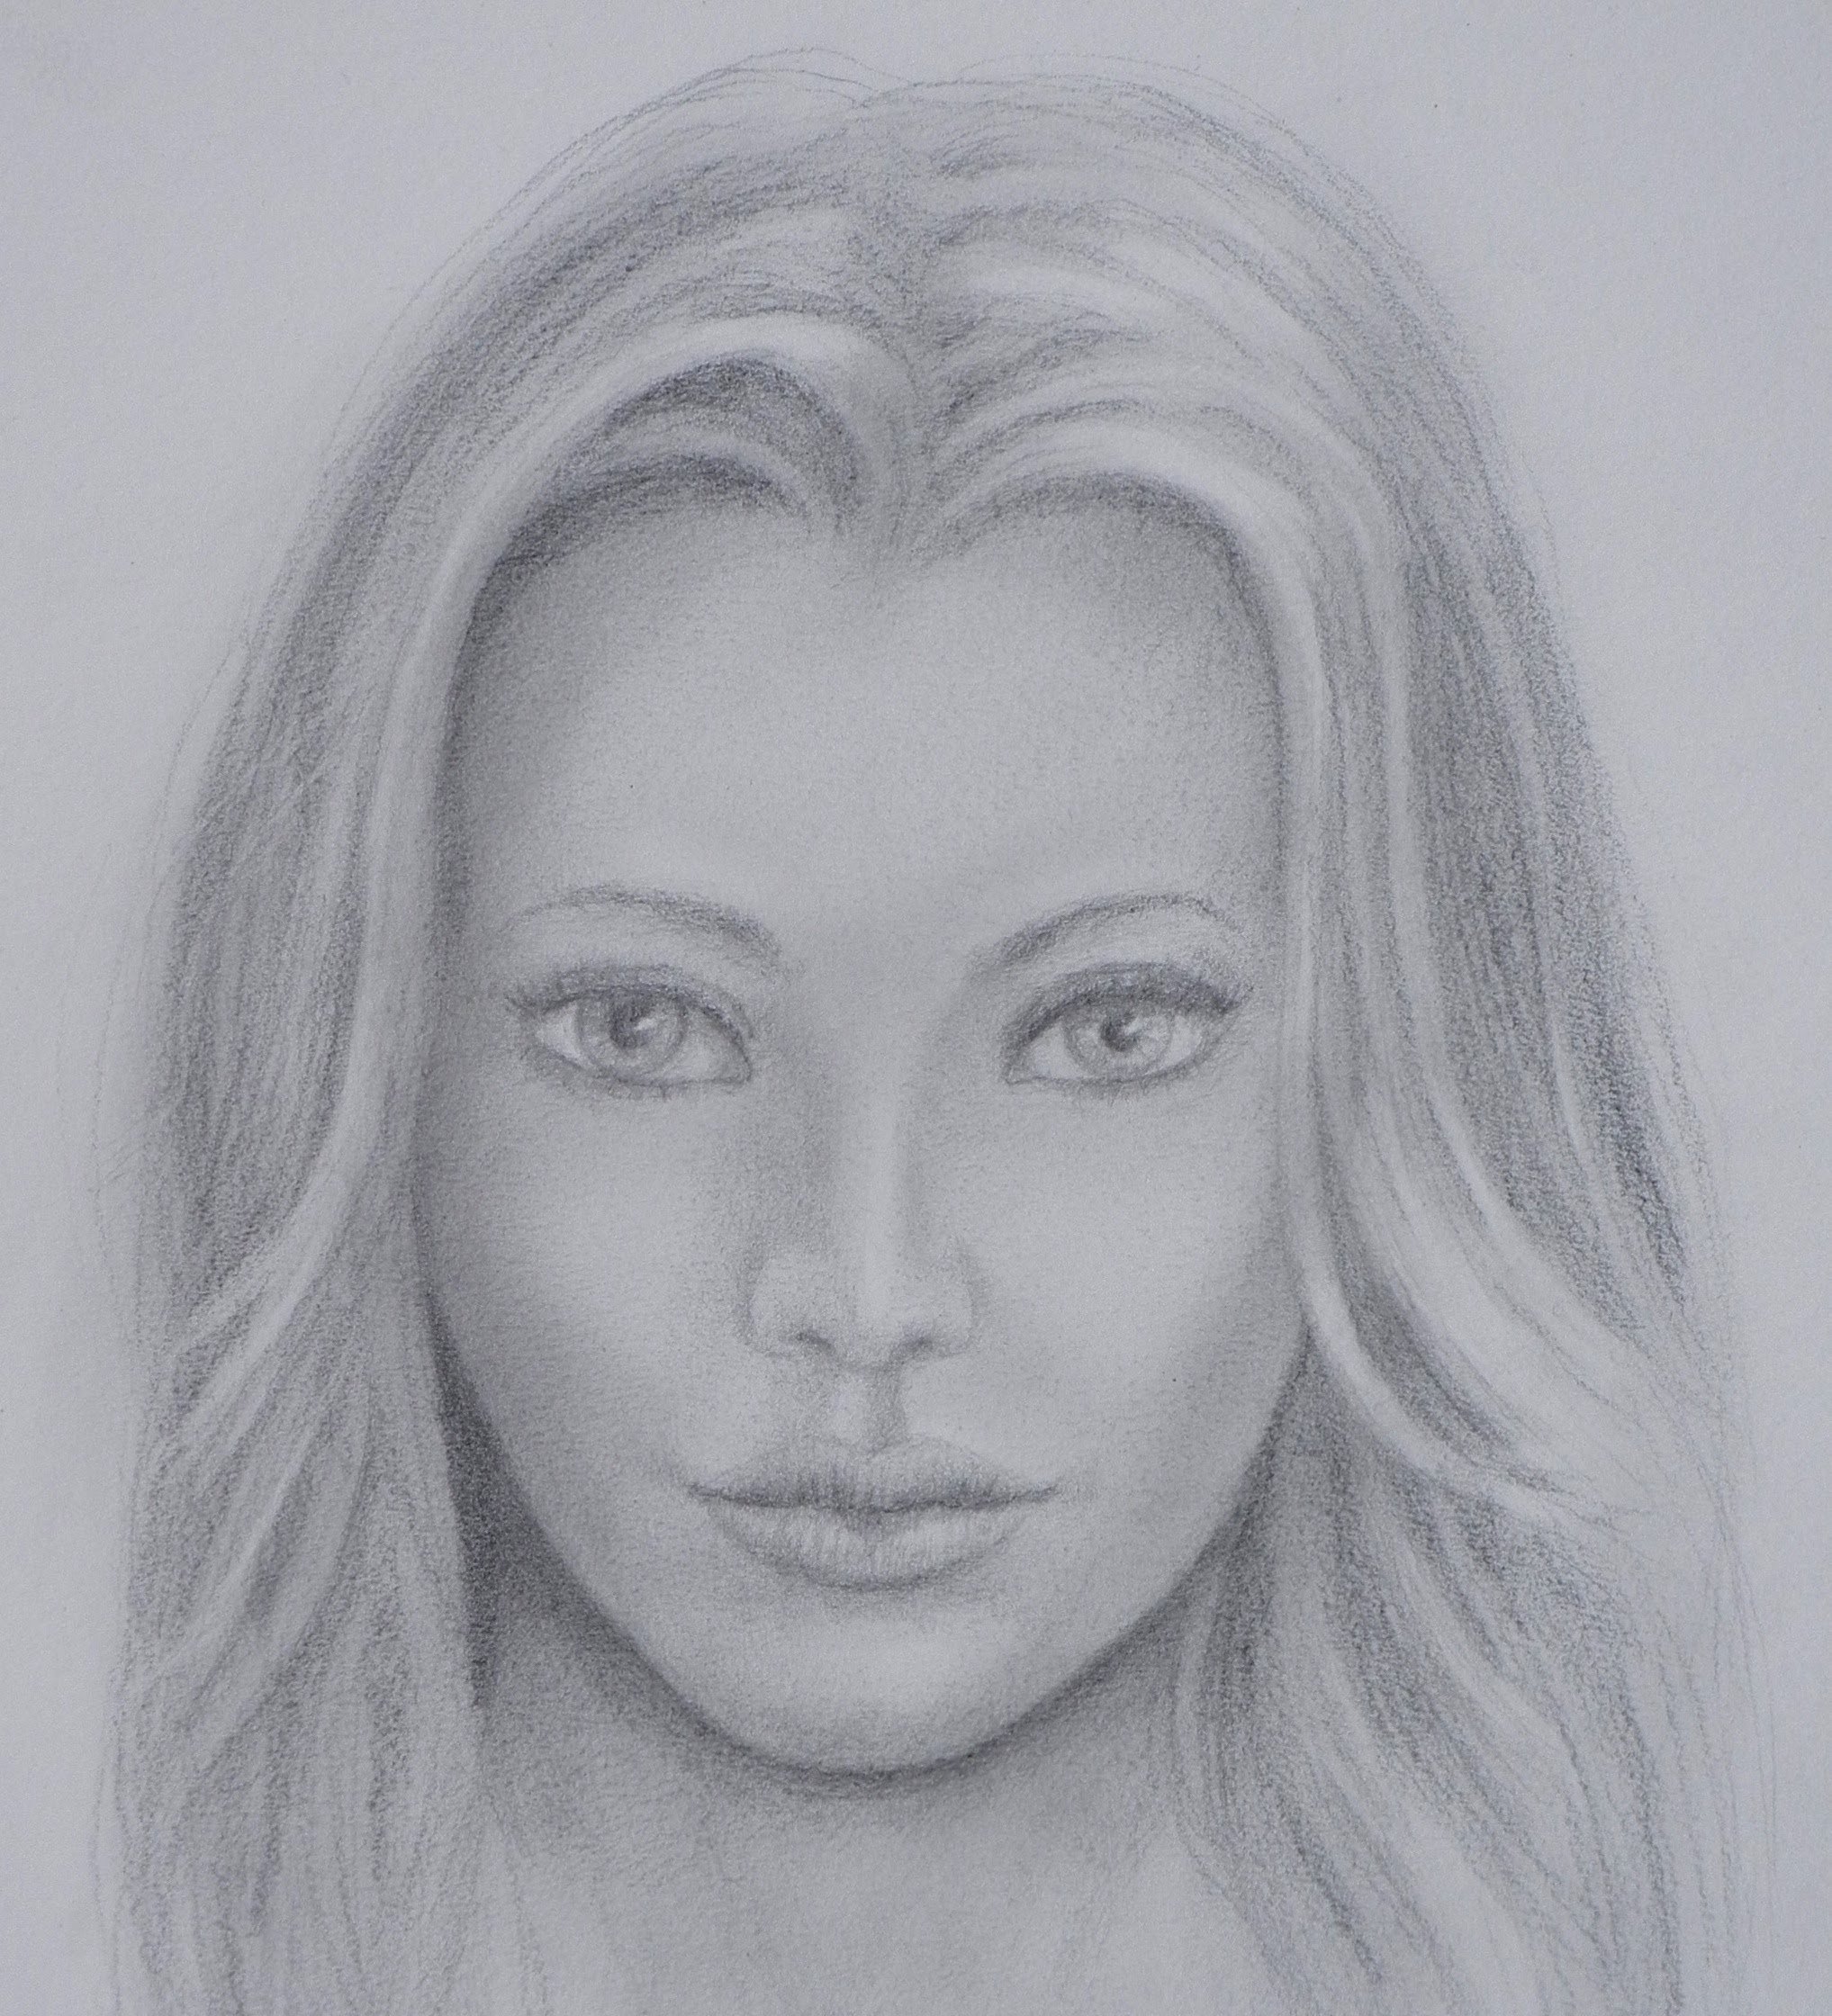 Портрет девушки карандашом